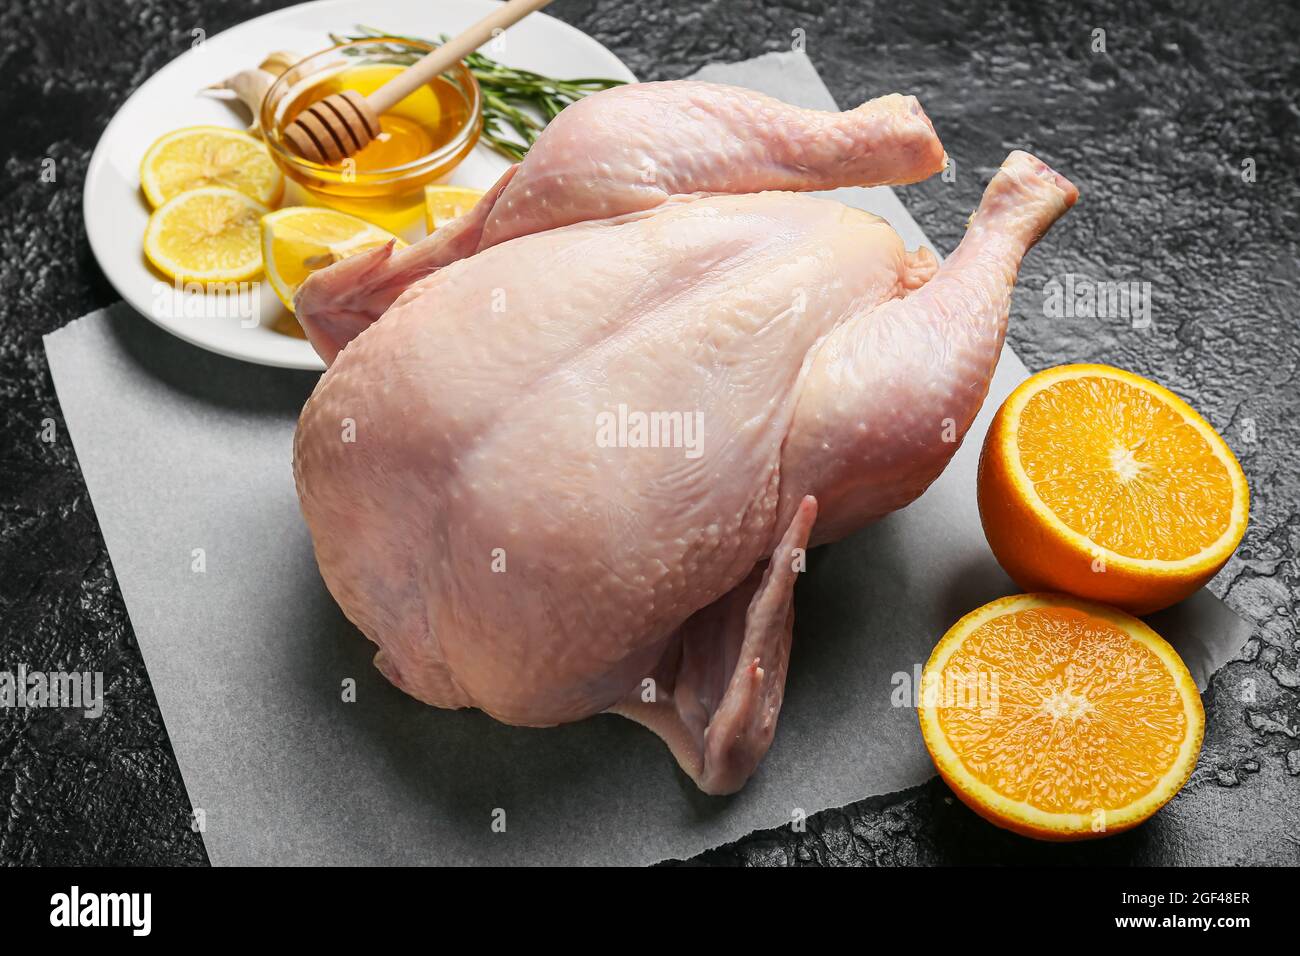 https://c8.alamy.com/comp/2GF48ER/parchment-with-whole-raw-chicken-orange-lemon-and-spices-on-dark-background-closeup-2GF48ER.jpg